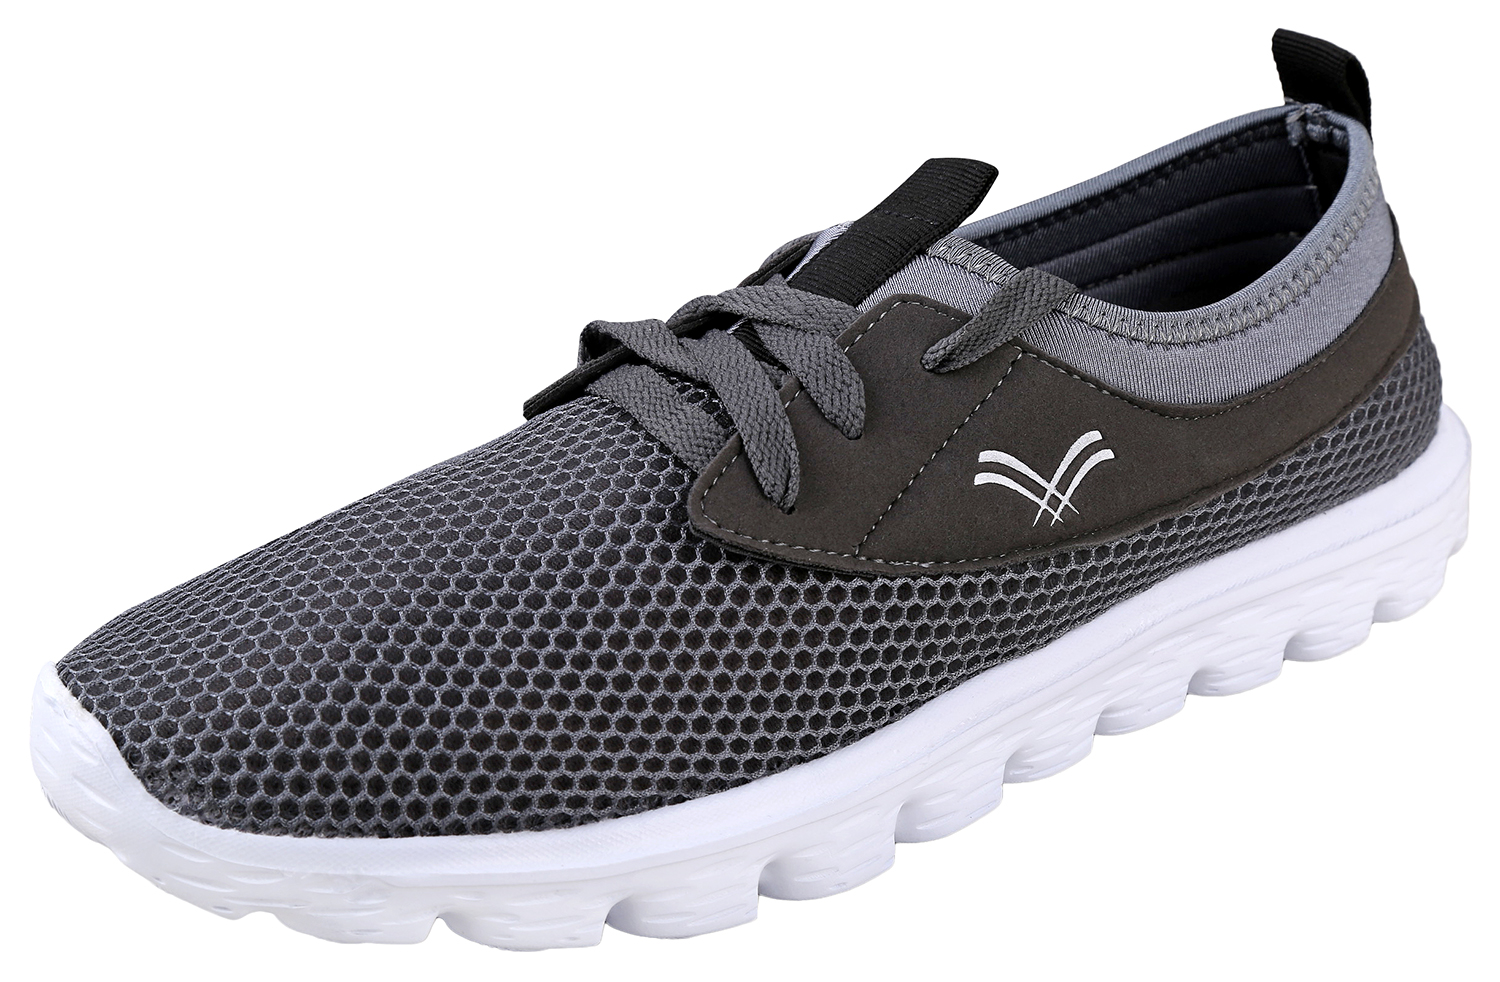 Urban Fox Men's Breeze Lightweight Shoes | Lightweight Shoes for Men | Casual Shoes | Walking Shoes for Men | Grey/White 11 M US - image 1 of 7